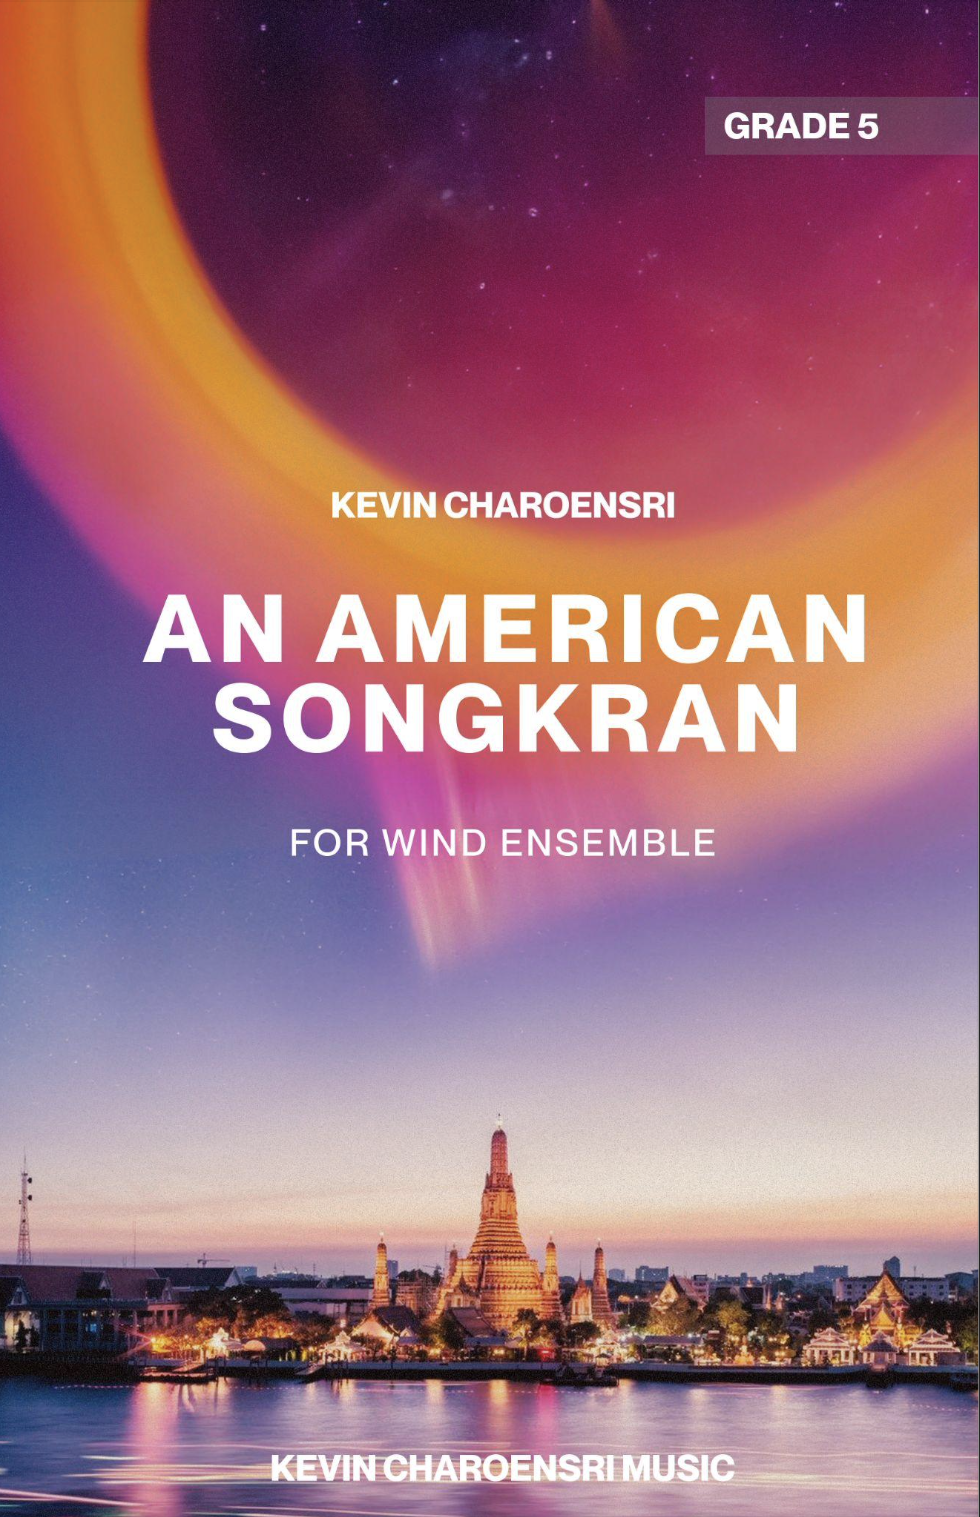 An American Songkran by Kevin Charoensri